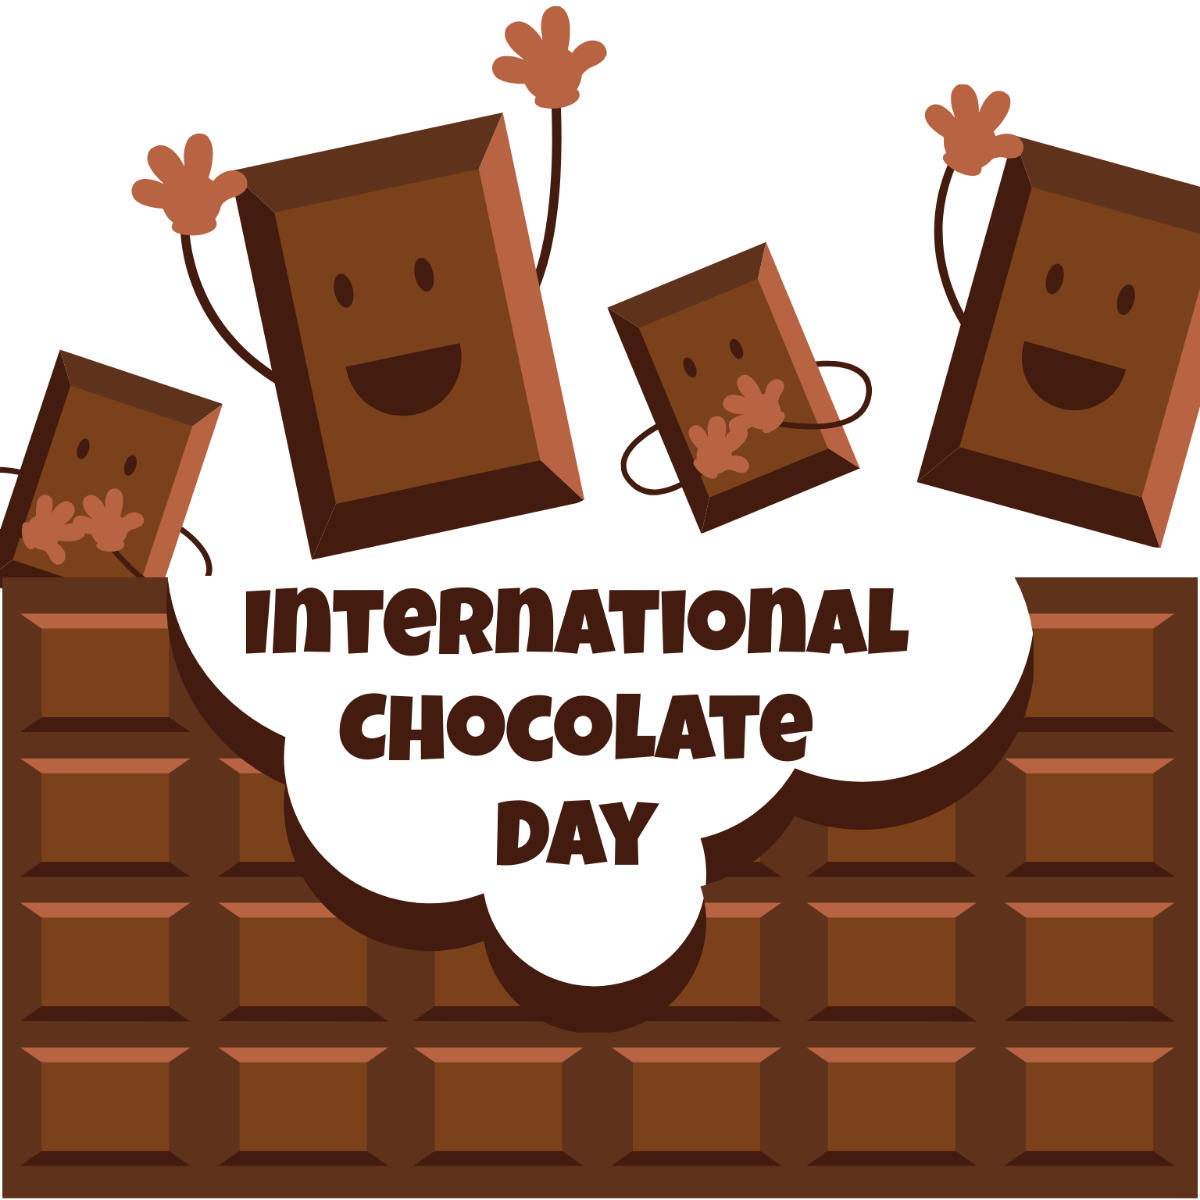 International Chocolate Day Cartoon Vector